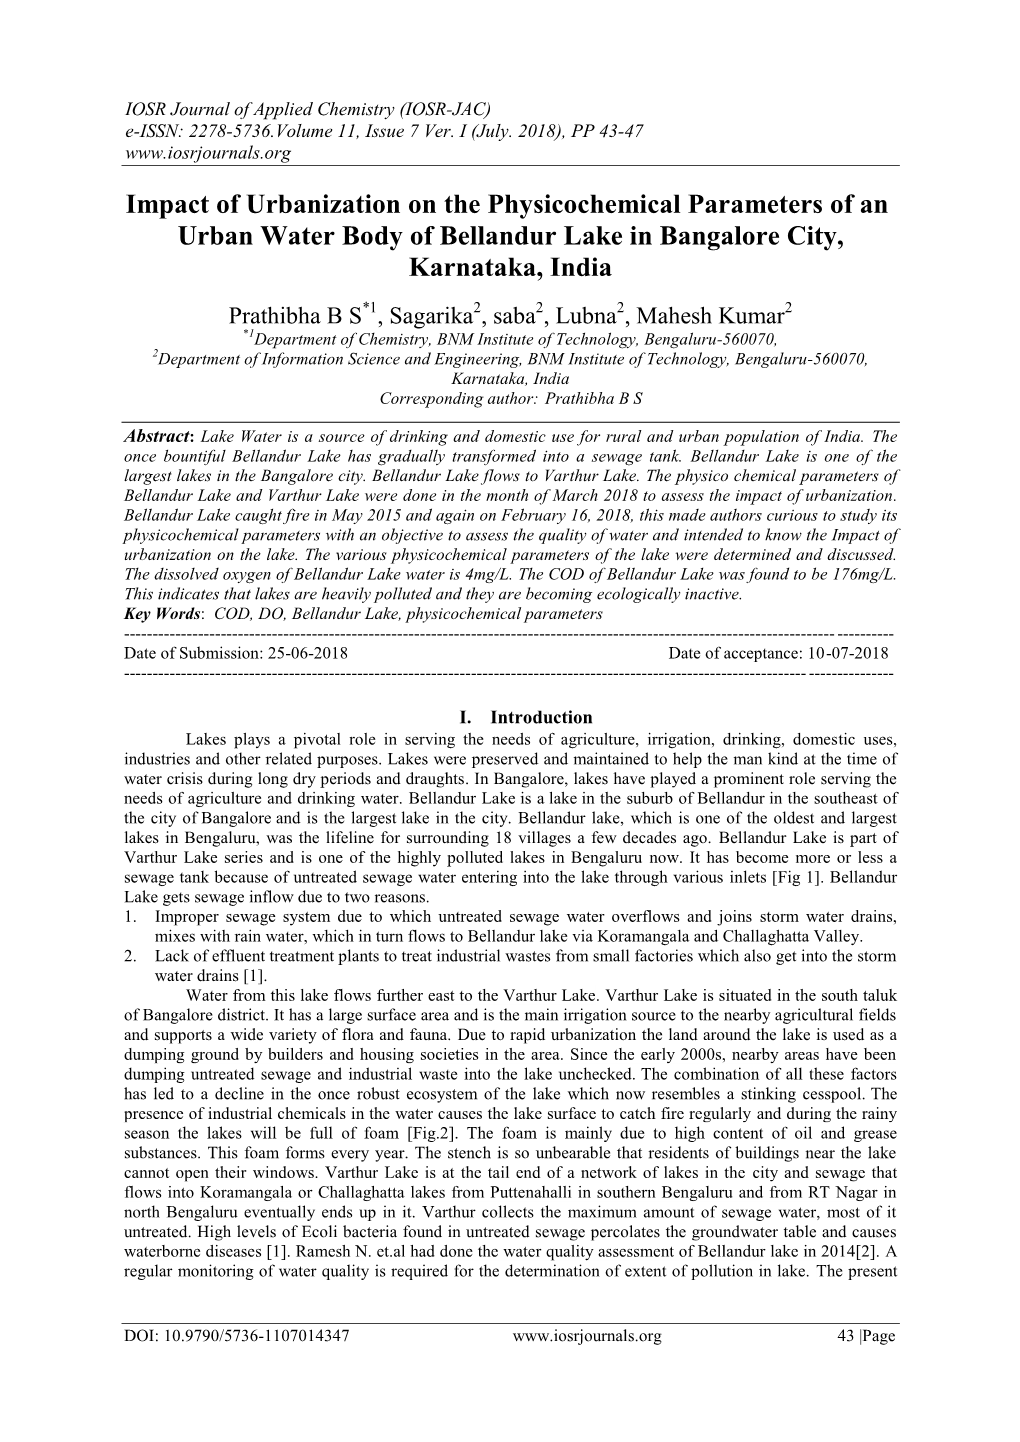 Impact of Urbanization on the Physicochemical Parameters of an Urban Water Body of Bellandur Lake in Bangalore City, Karnataka, India